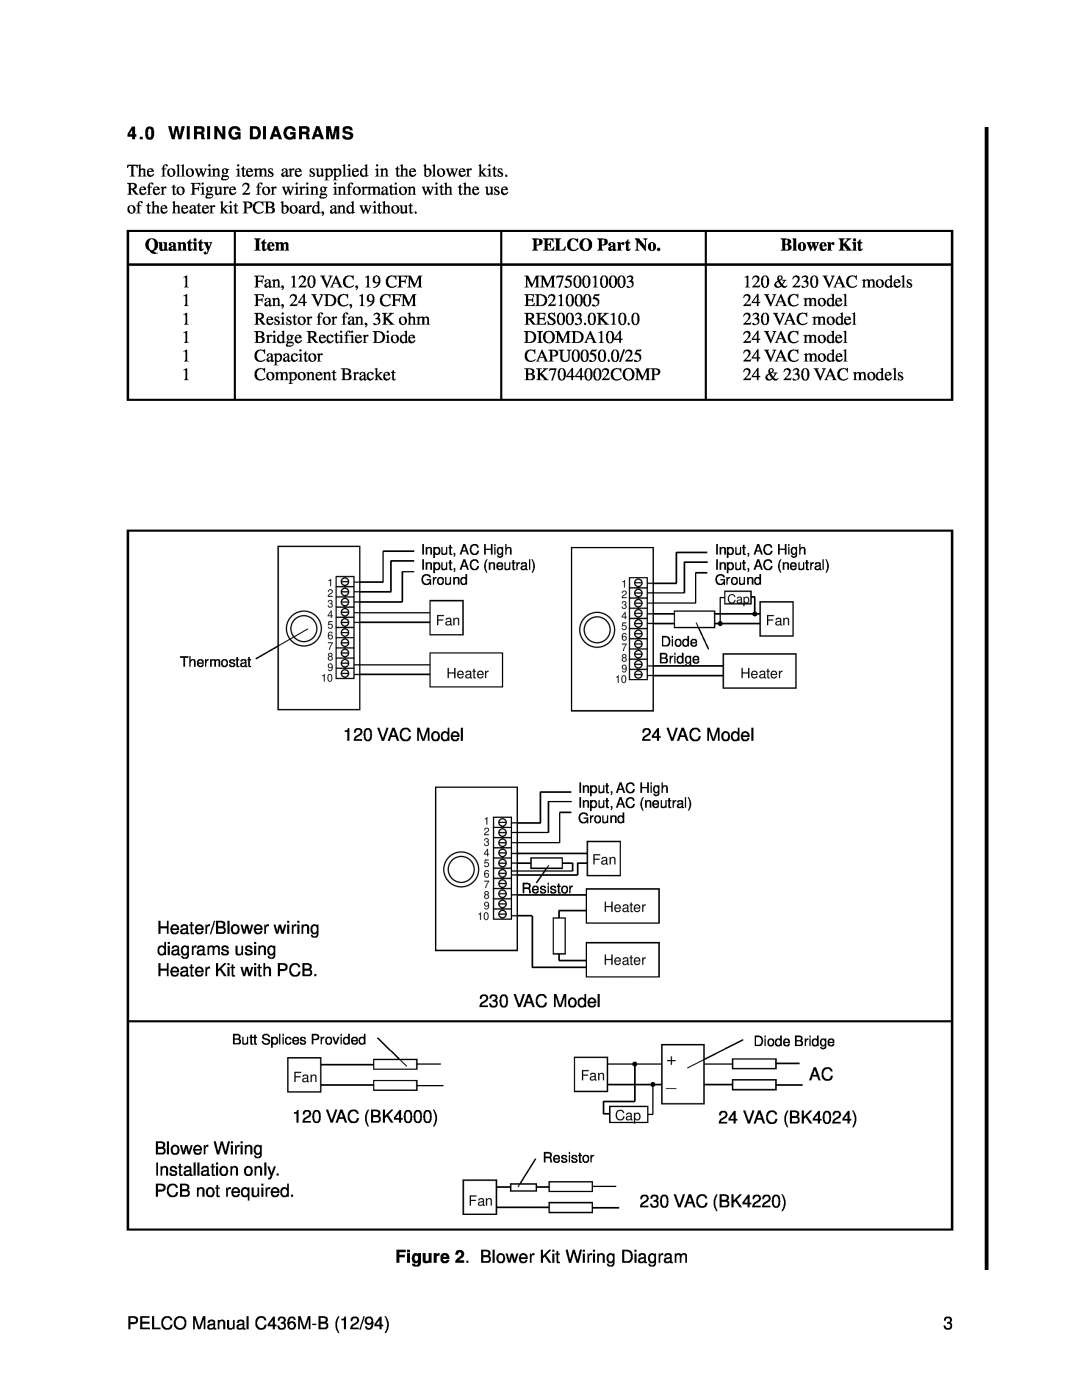 Pelco BK4024, BK4220 operation manual Wiring Diagrams, Quantity, PELCO Part No, Blower Kit 